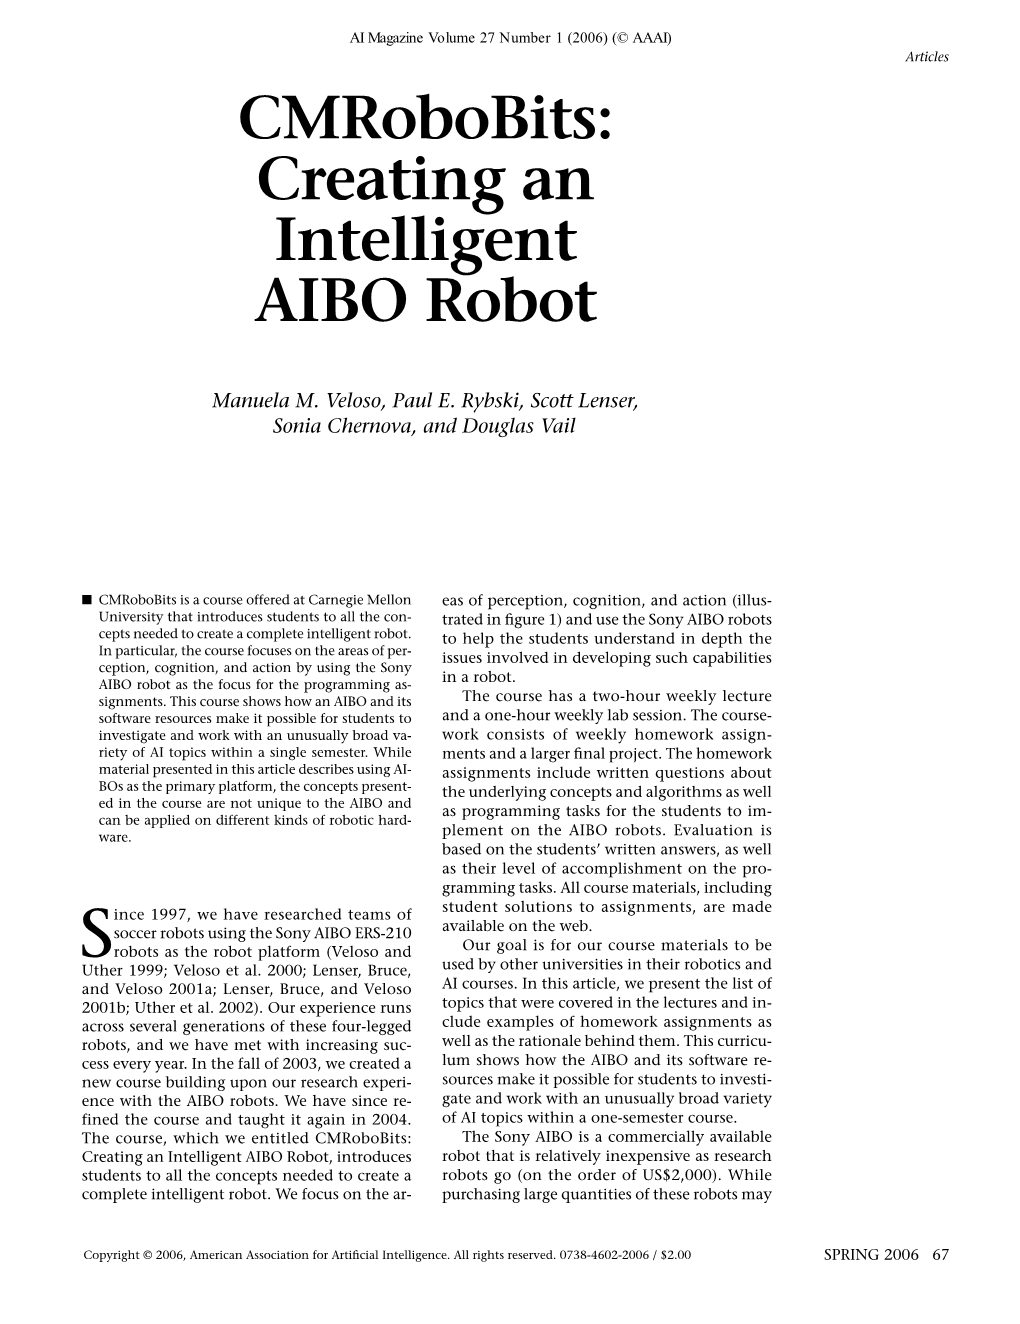 Cmrobobits: Creating an Intelligent AIBO Robot